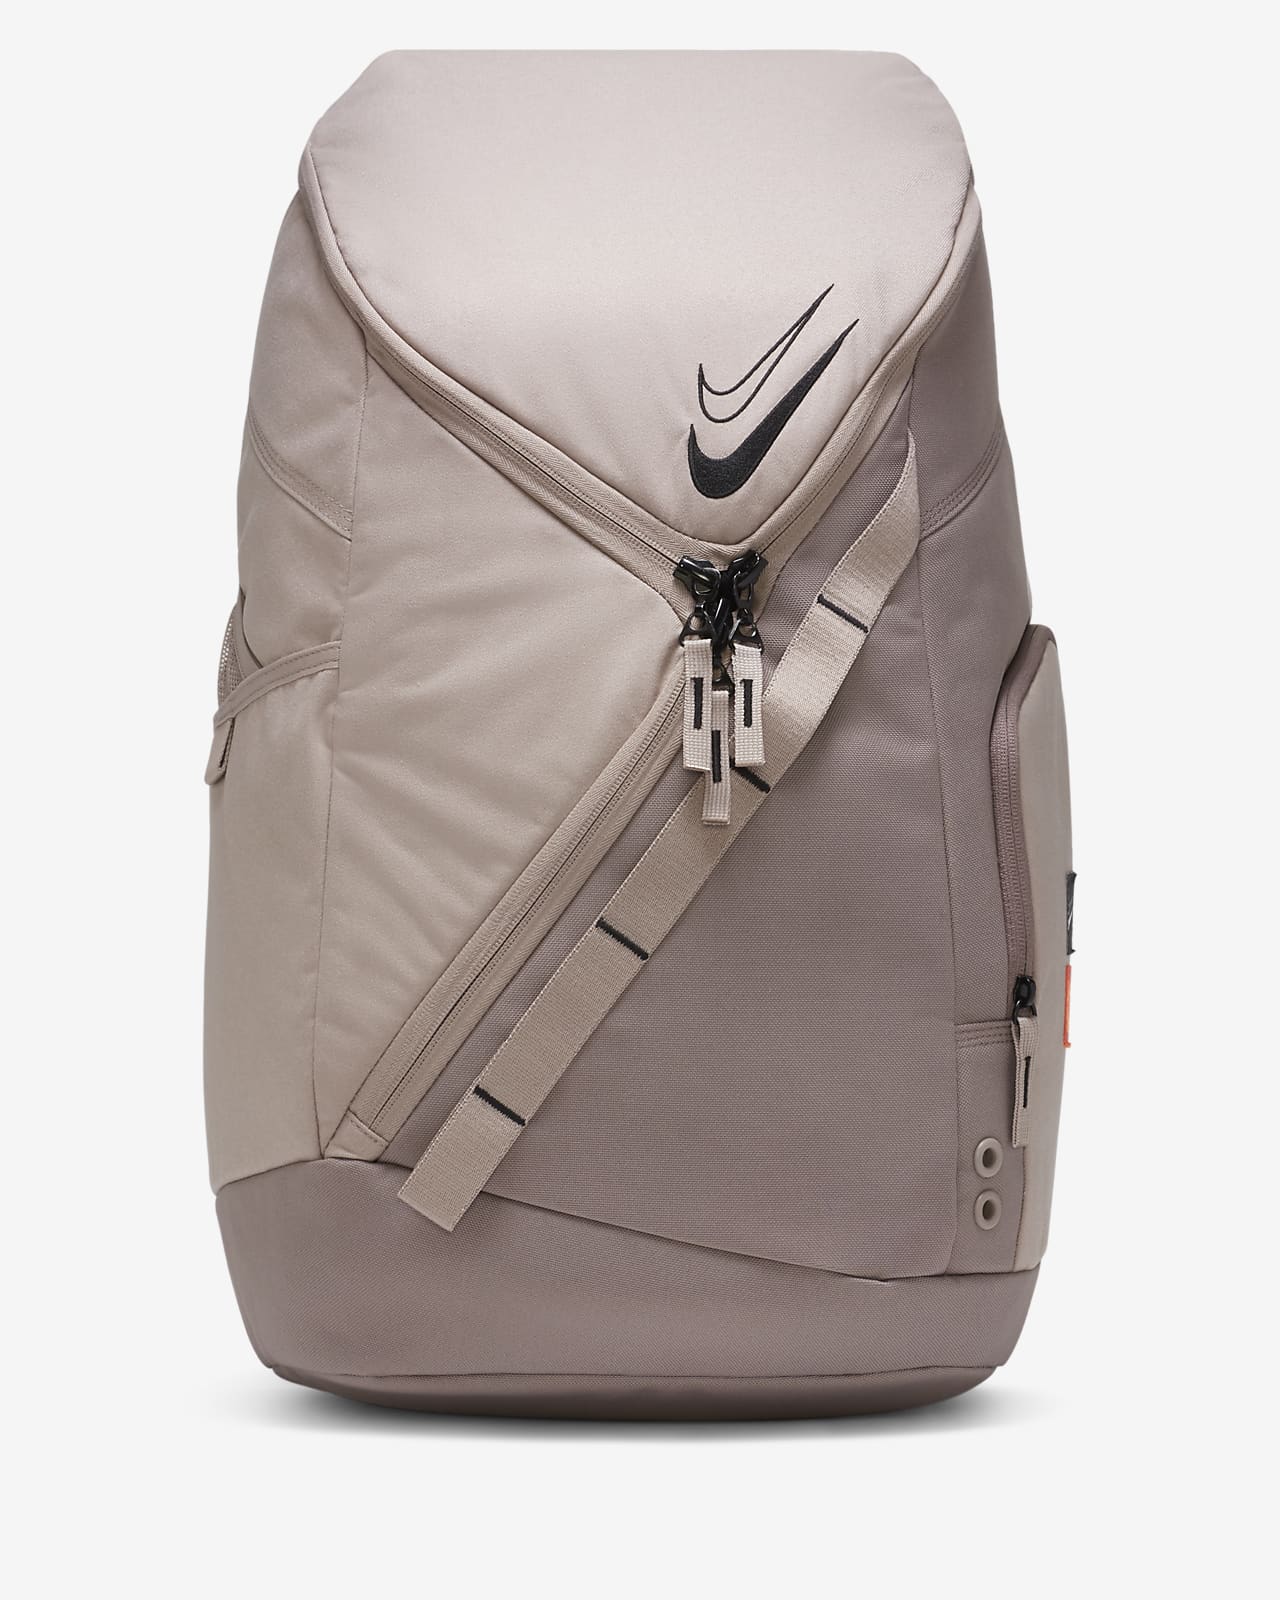 Kevin Durant #35 NBA Golden State Warriors Drawstring Backpack/Gym bag